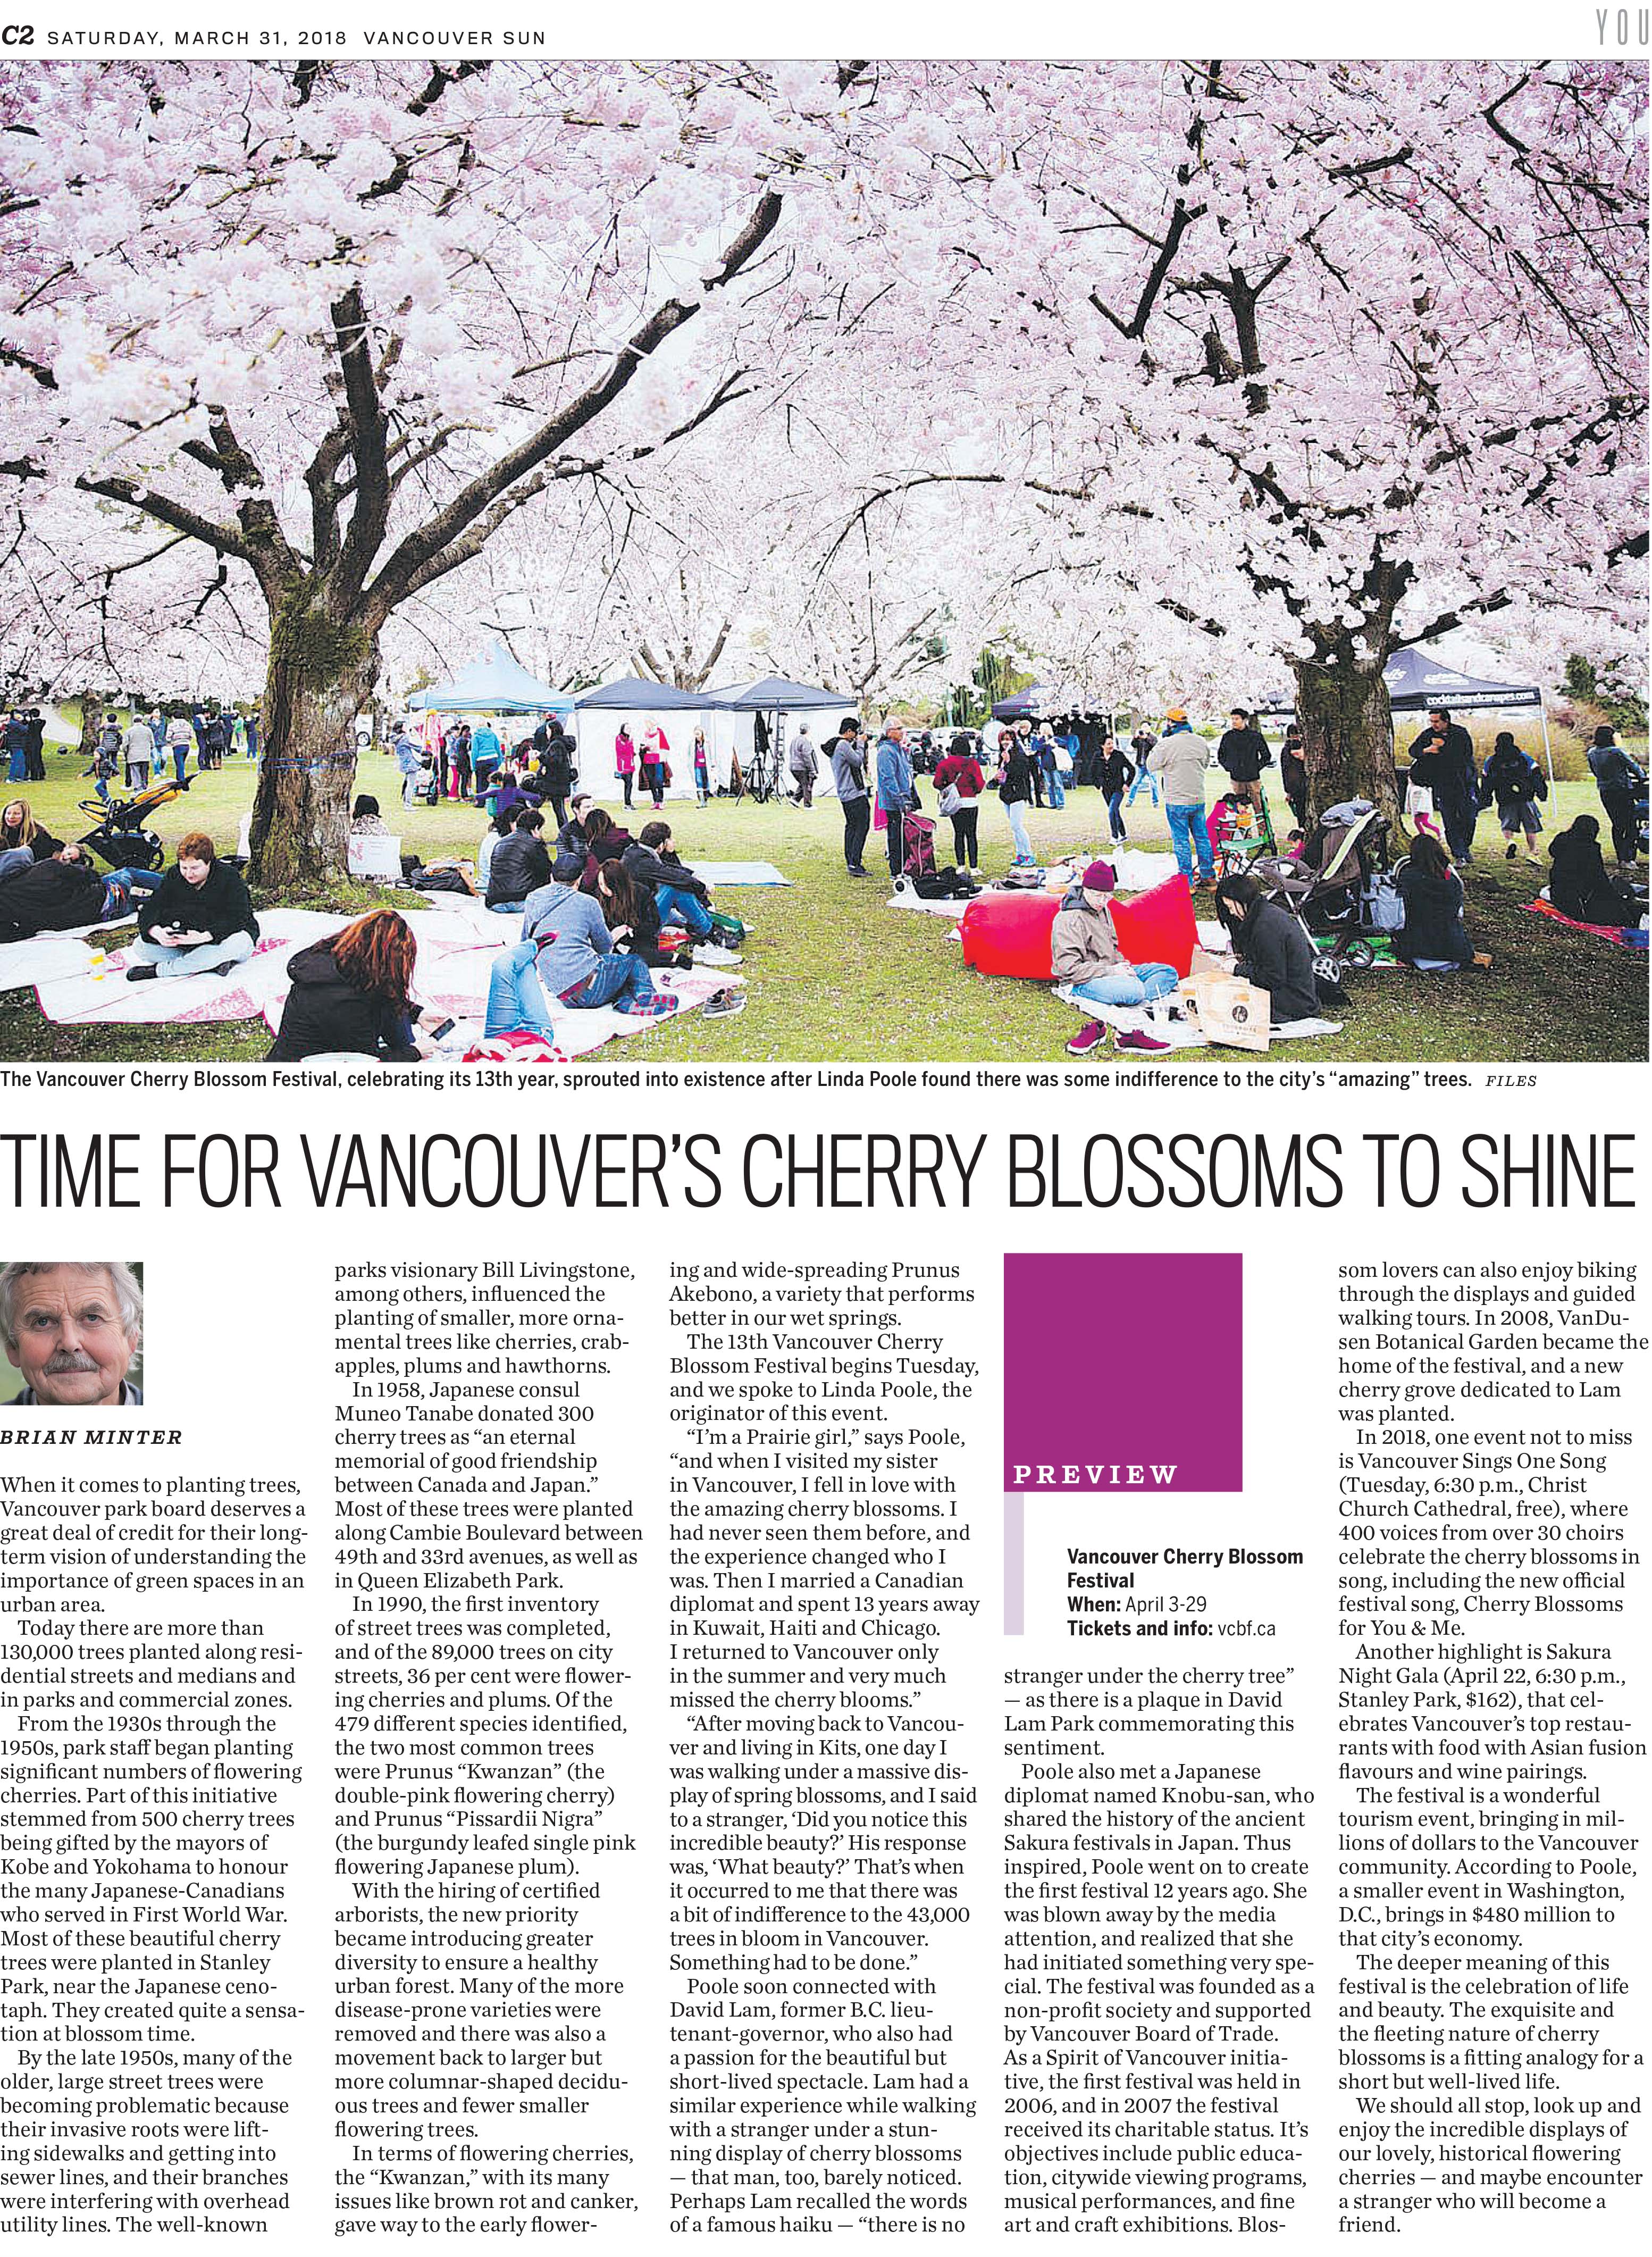 March 31 - Vancouver Sun